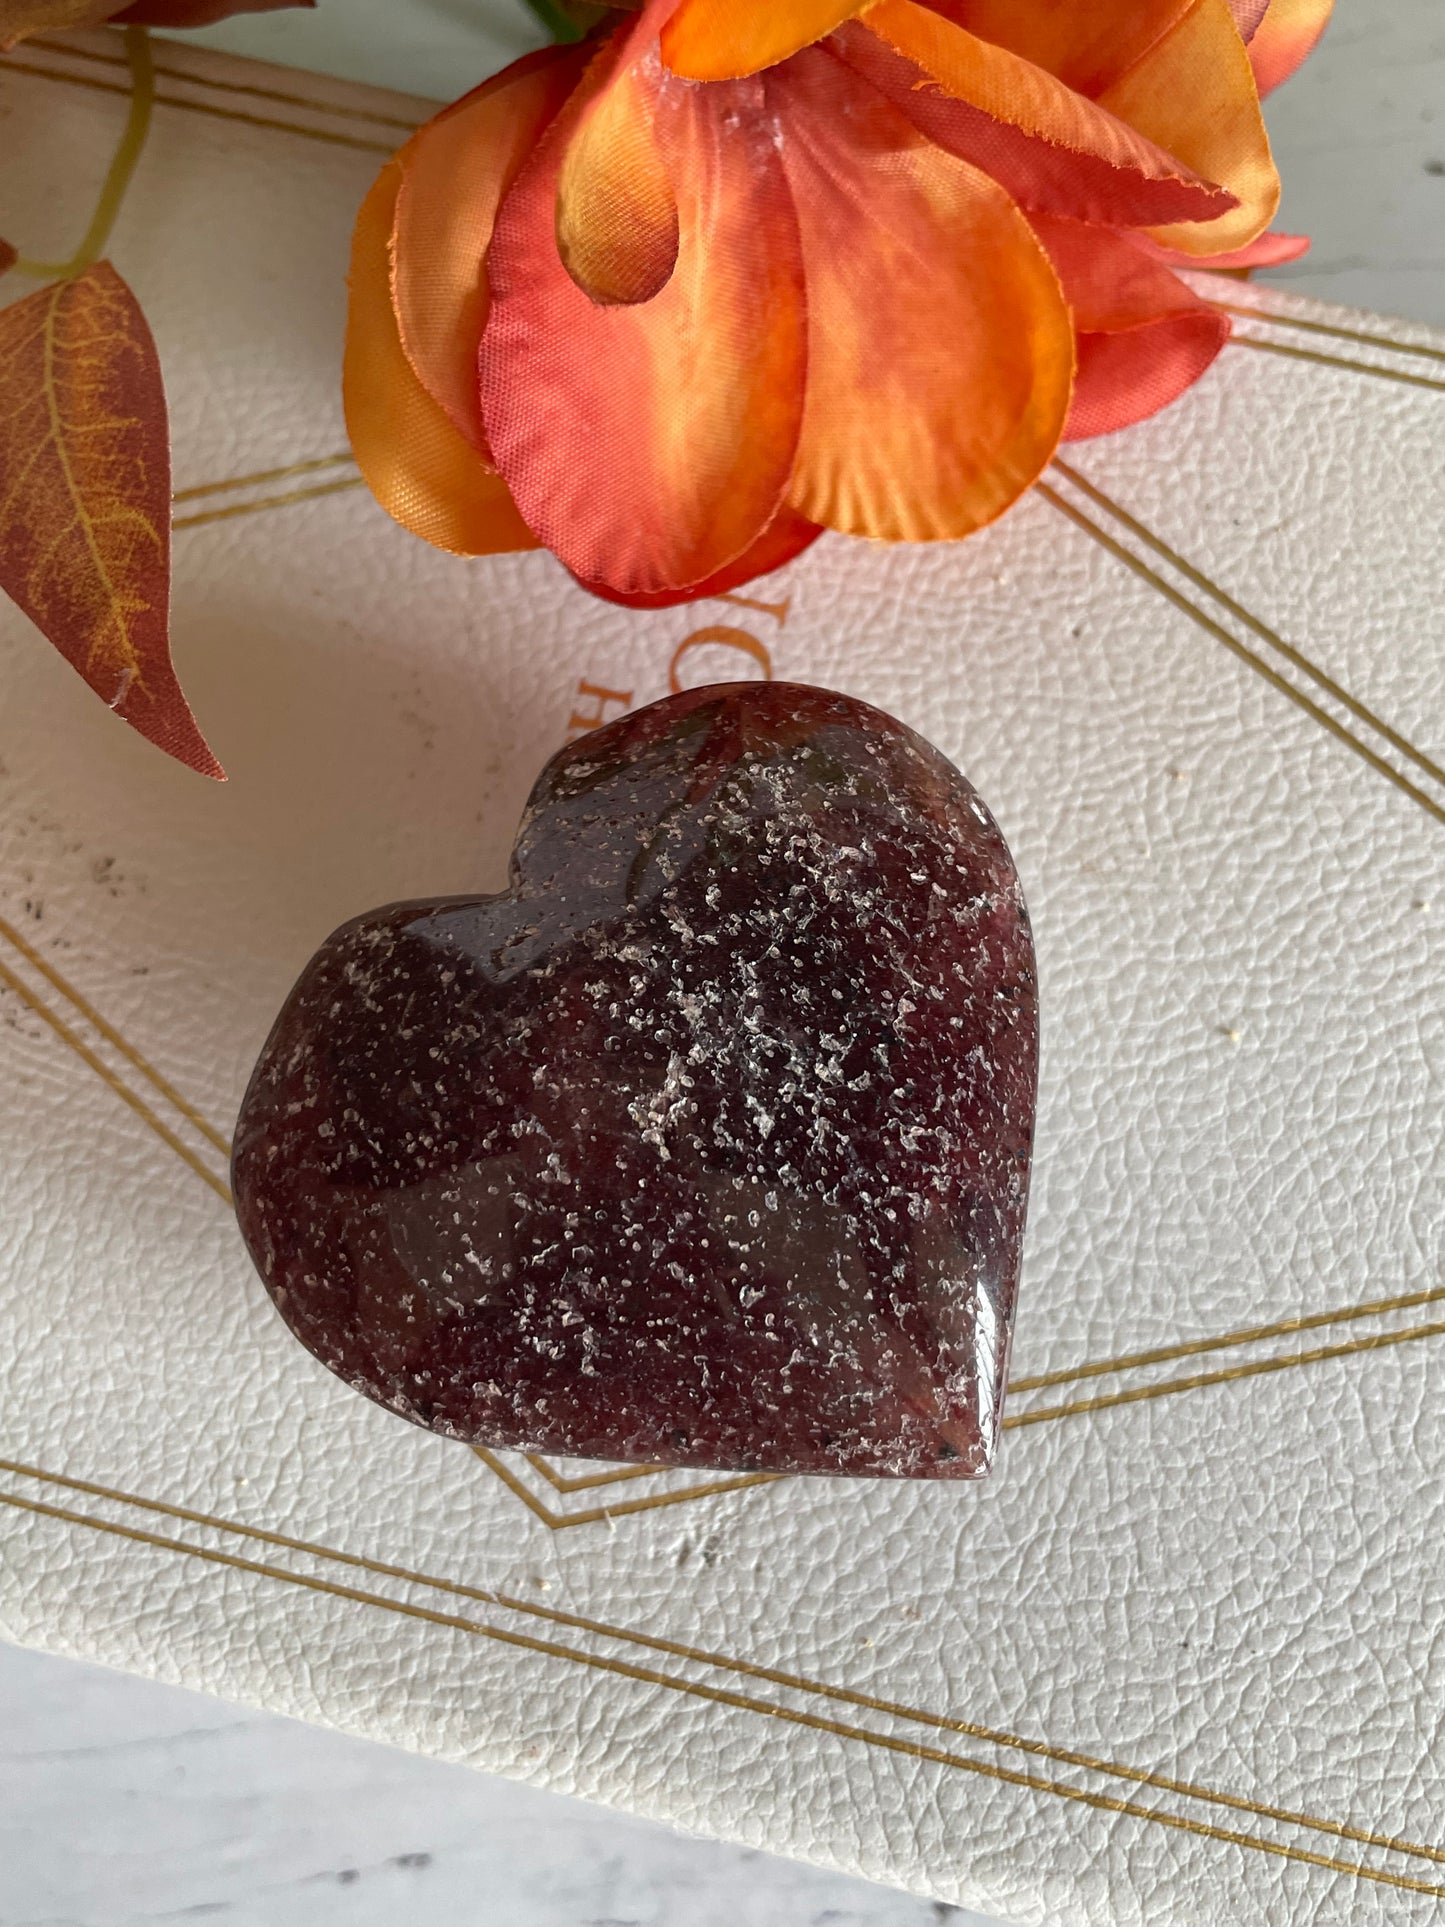 Strawberry Quartz Heart